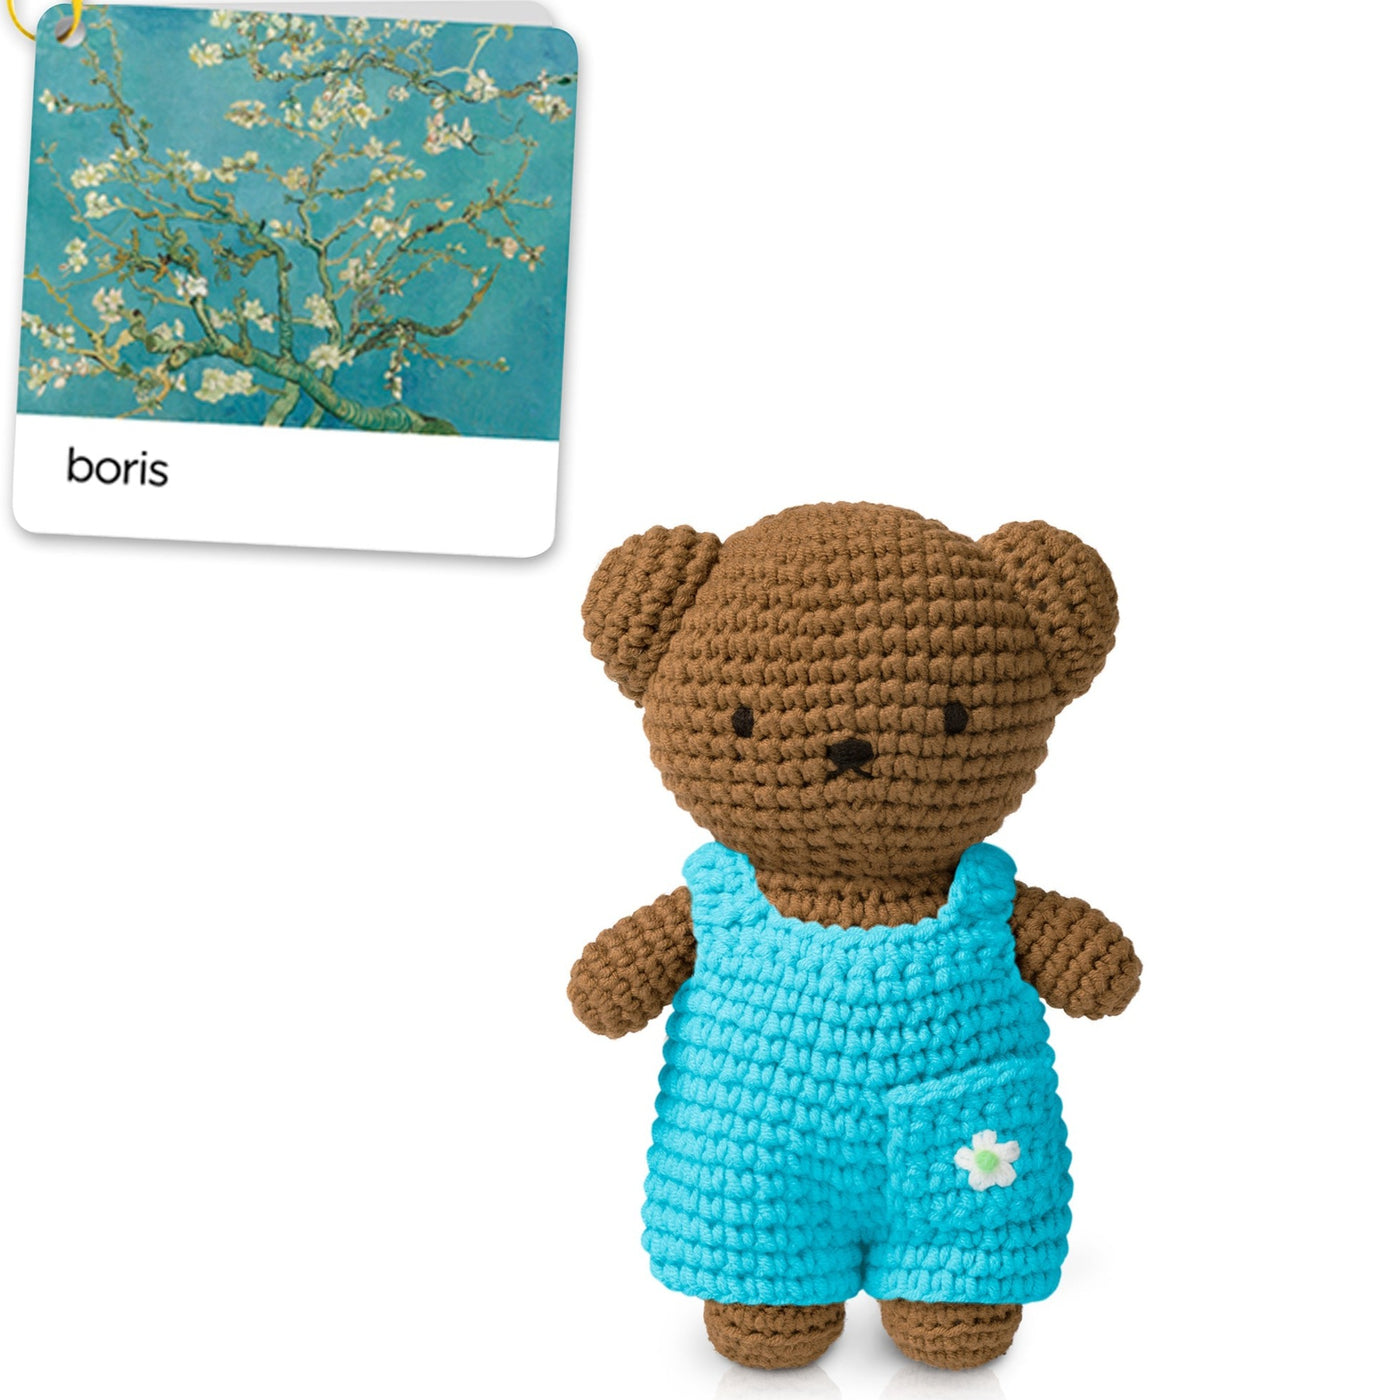 Crocheted Boris in Van Gogh Inspired Almond Blossom Overall